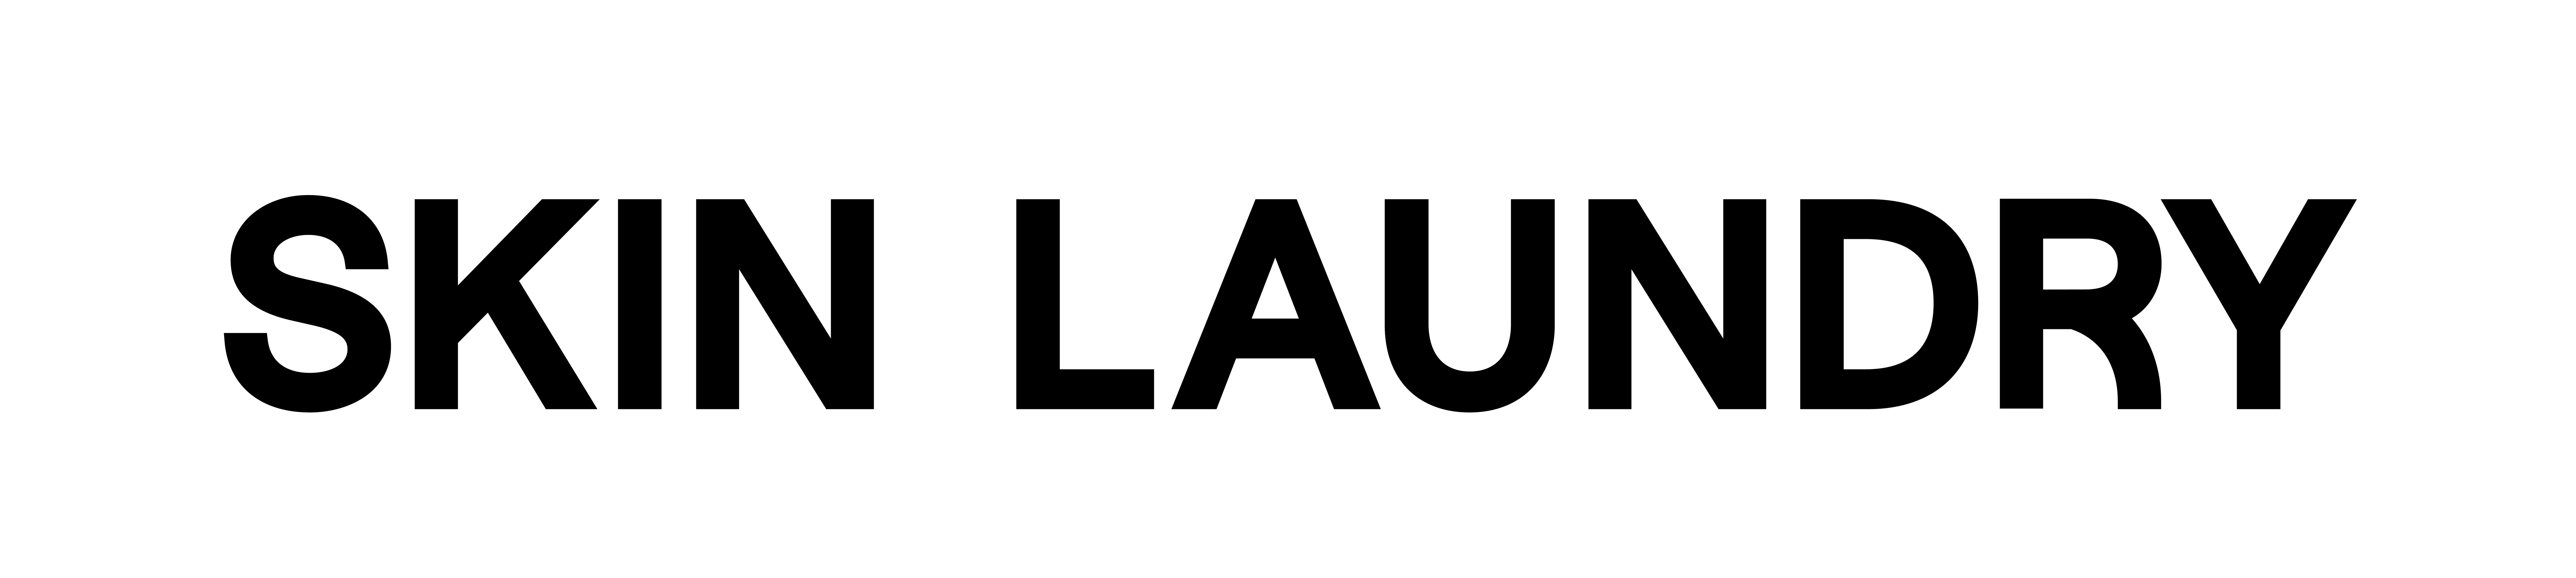 Skin Laundry Logo